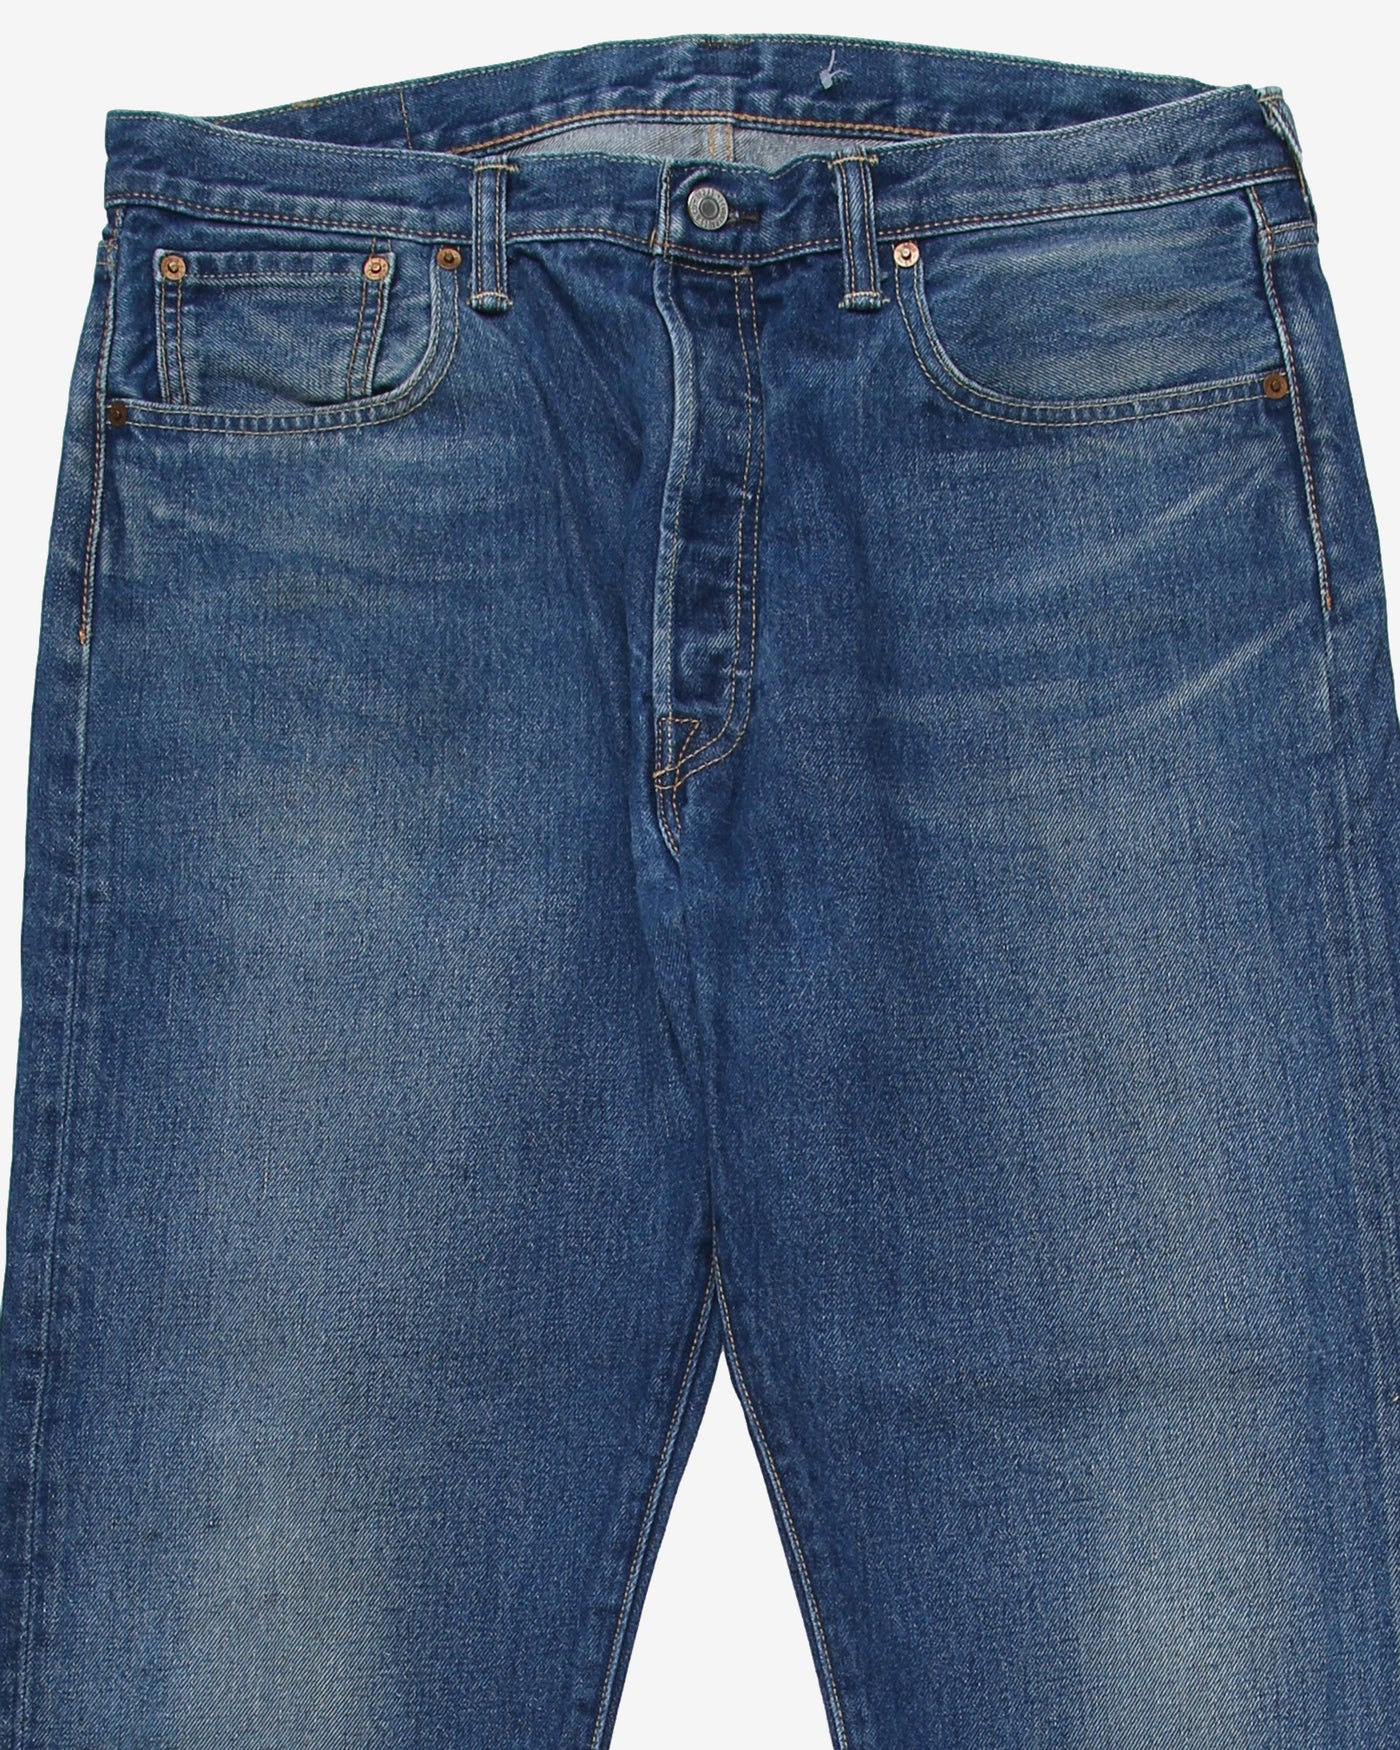 levis 501 CT mid wash indigo denim jeans - w36 l31